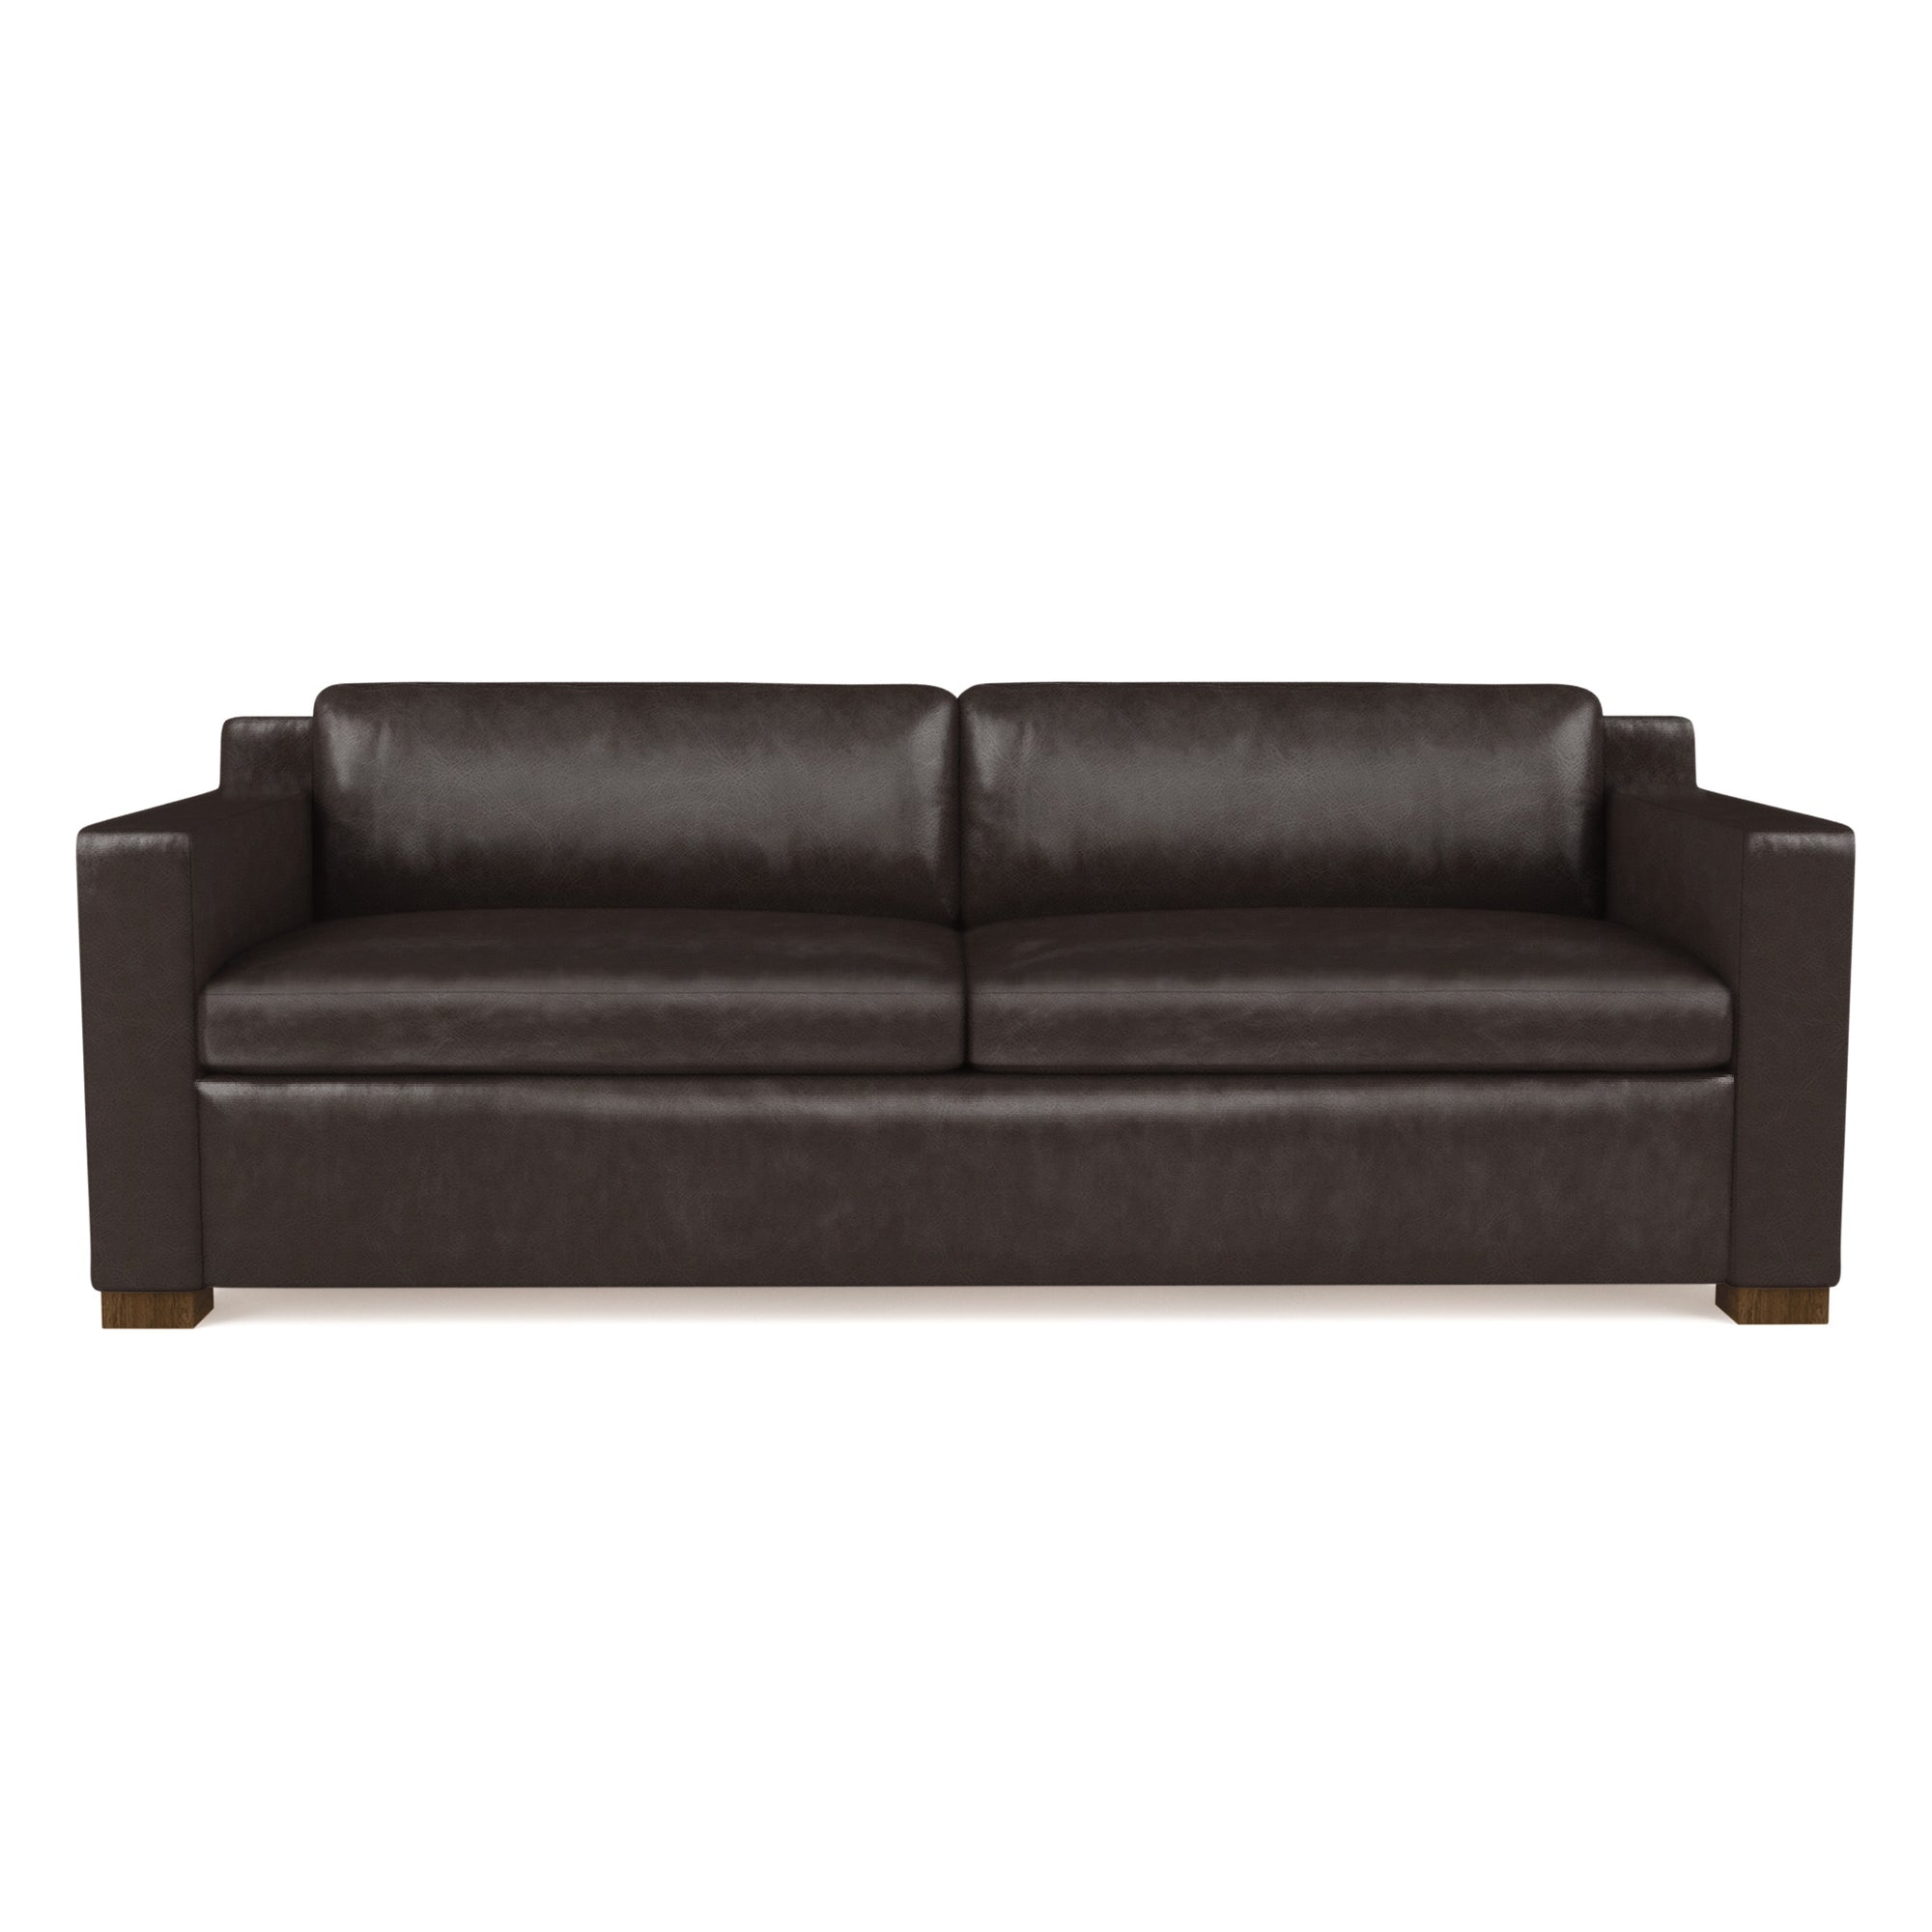 Mercer Sofa - Chocolate Vintage Leather